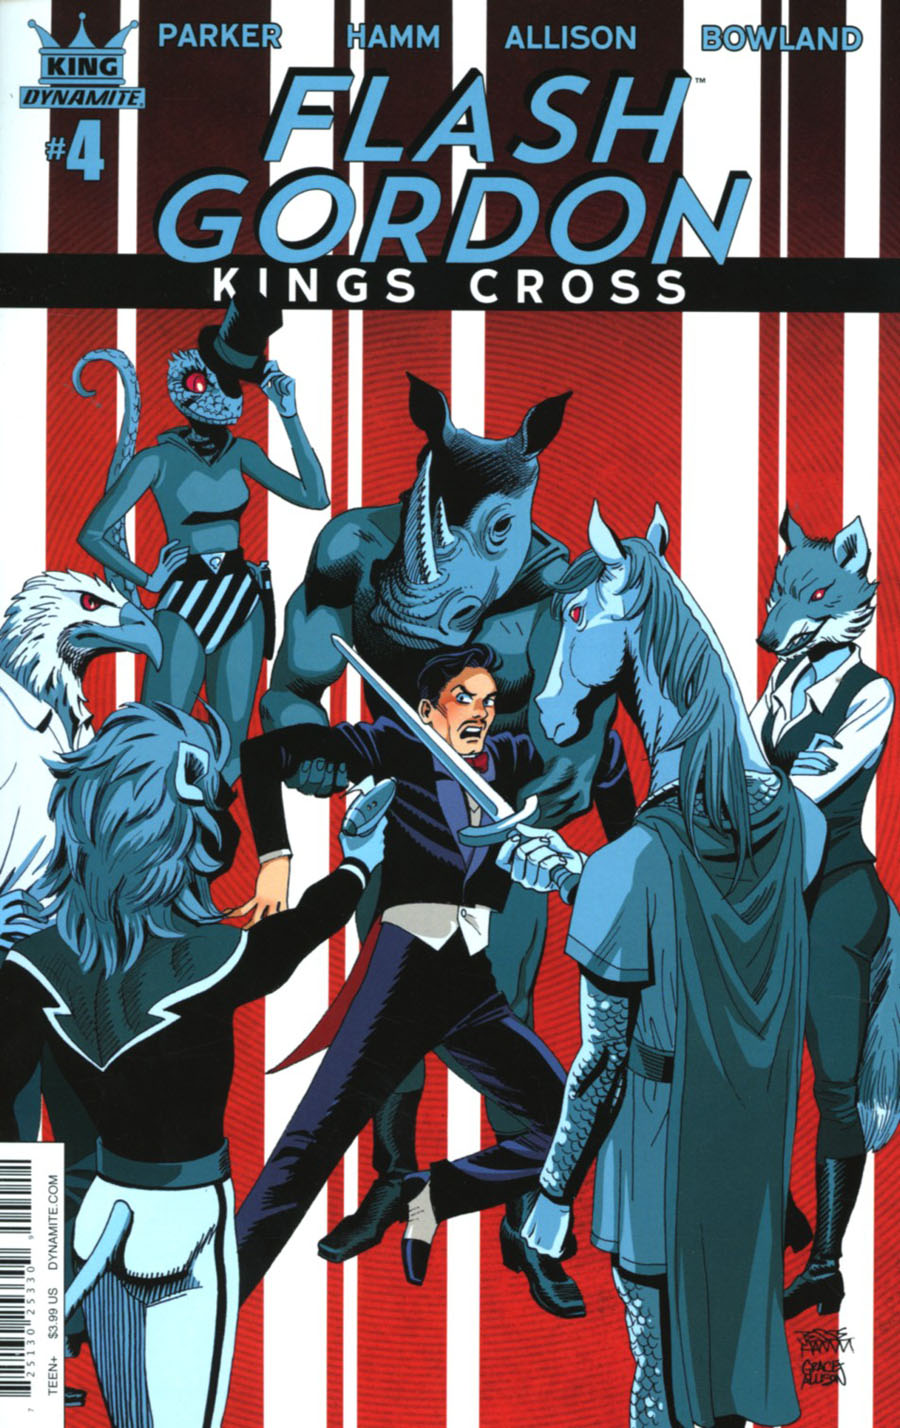 Flash Gordon Kings Cross #4 Cover A Regular Jesse Hamm & Grace Allison Cover